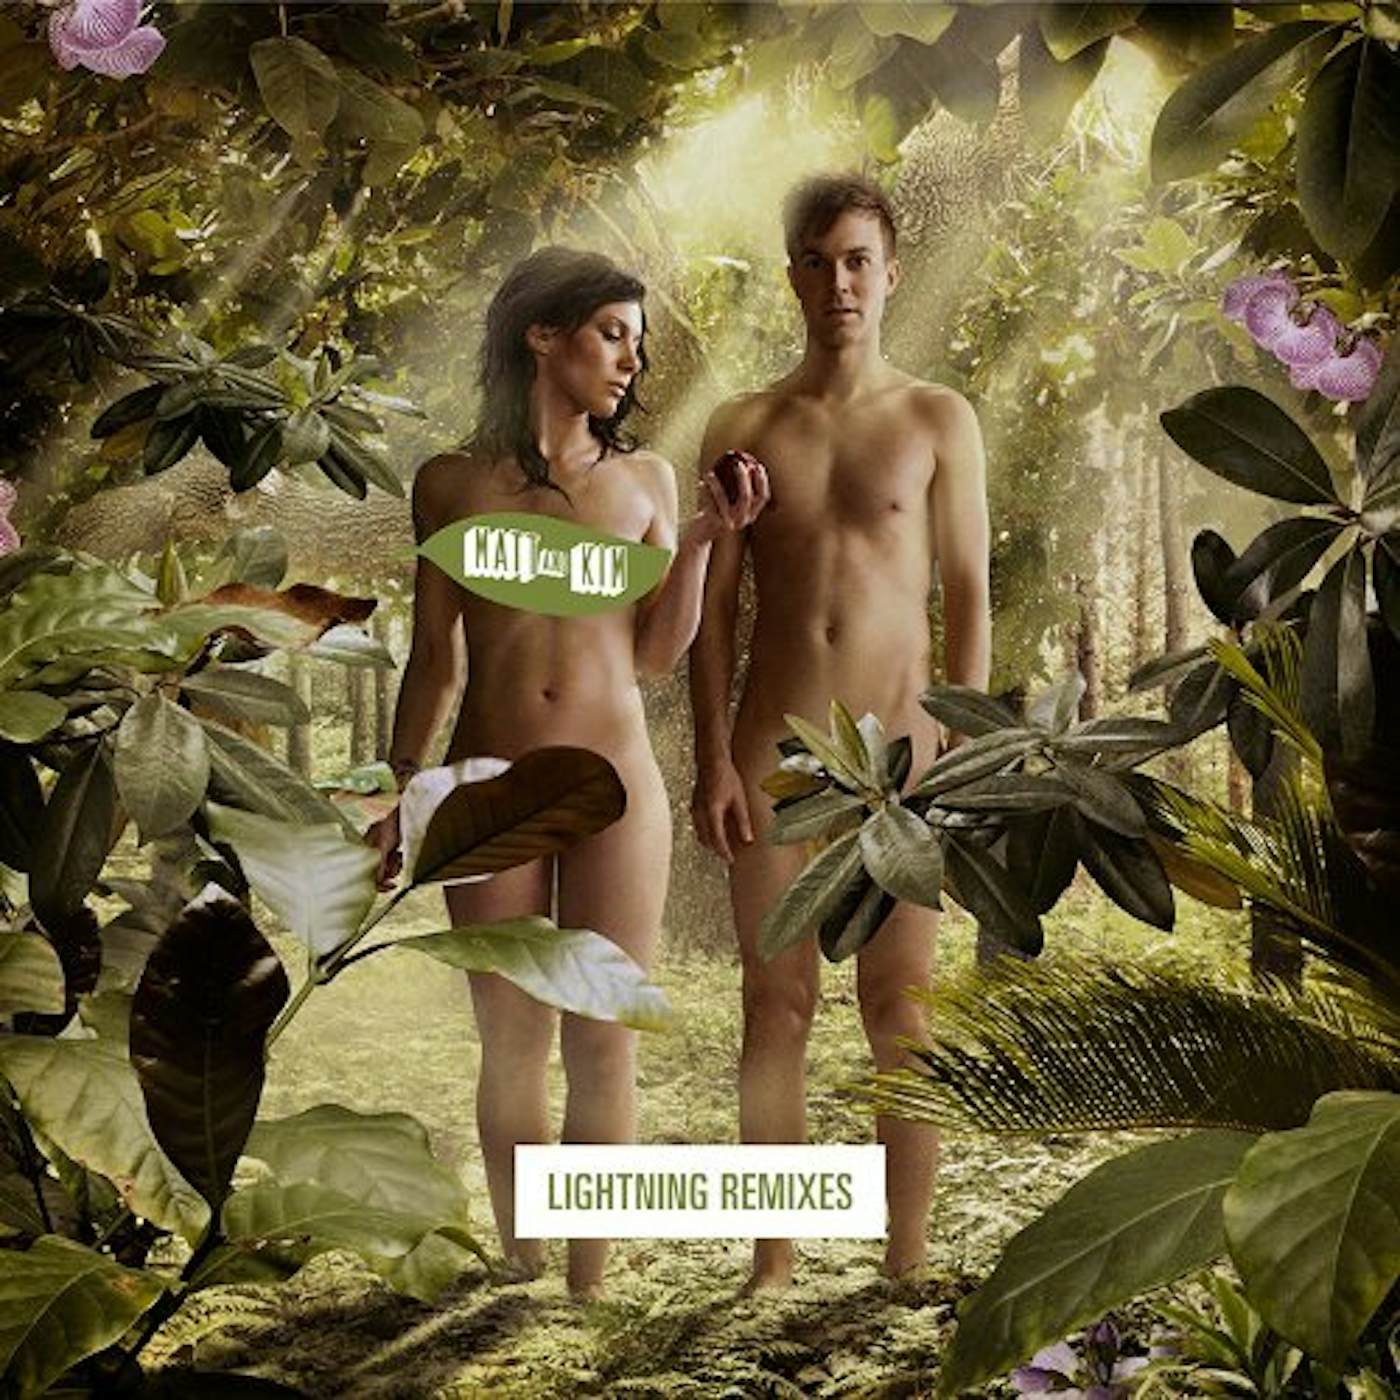 Matt and Kim LIGHTNING REMIXES Vinyl Record - Limited Edition, Uncensored